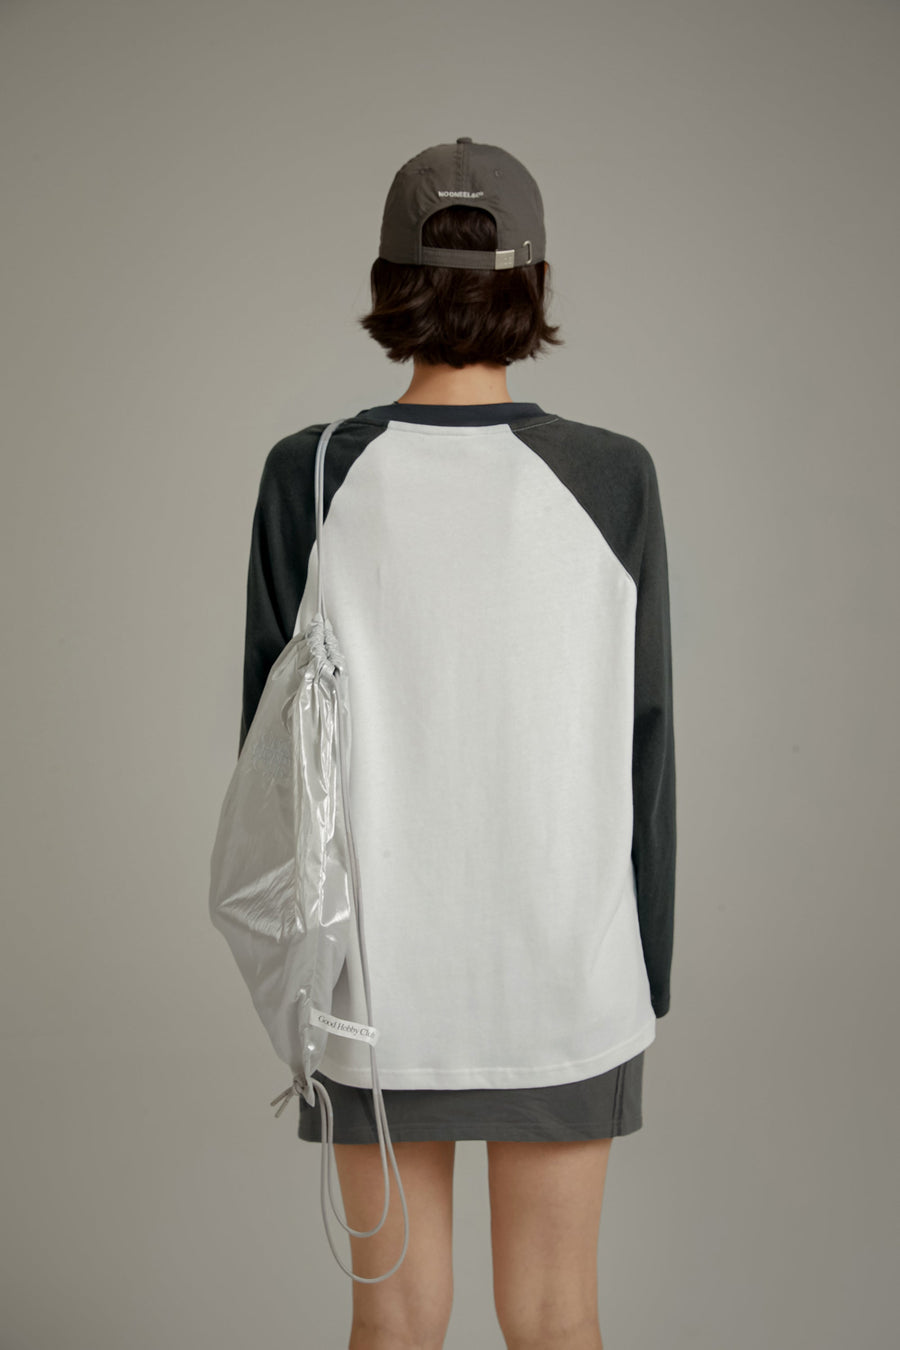 CHUU Colorblocked Raglan Long Sleeves Top